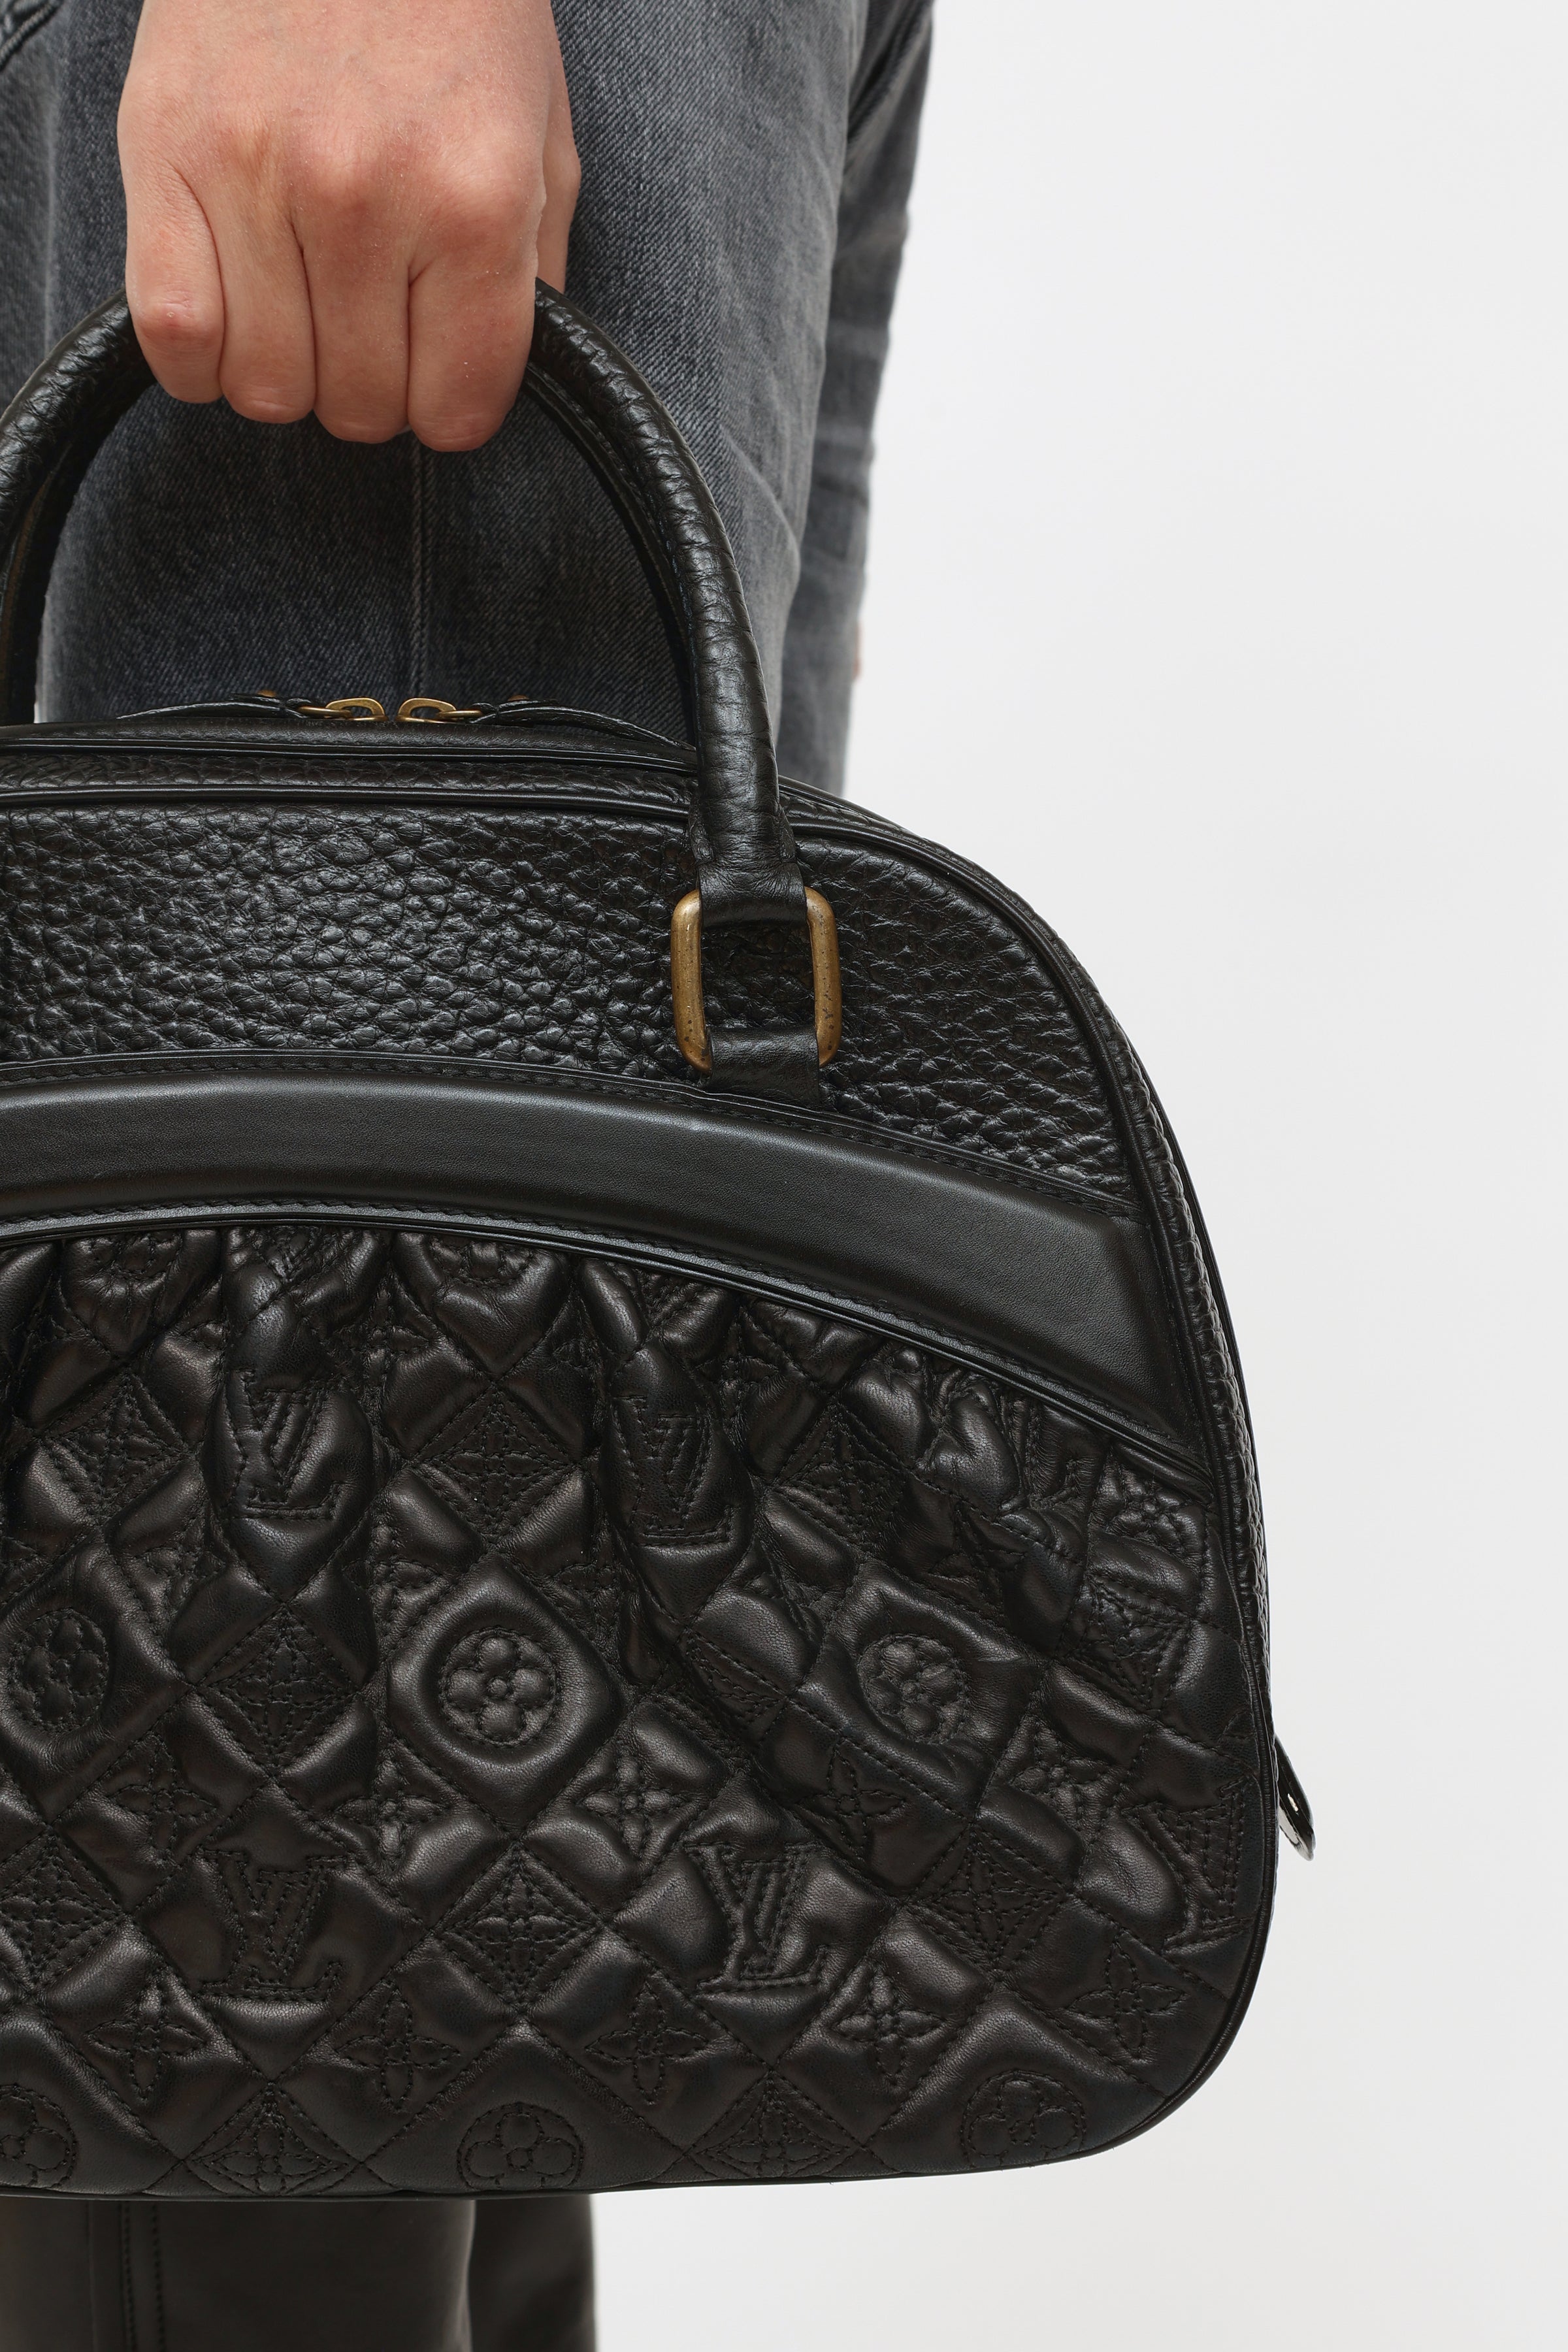 Louis Vuitton Louis Vuitton Mizi Monogram Canvas Handbag - Limited